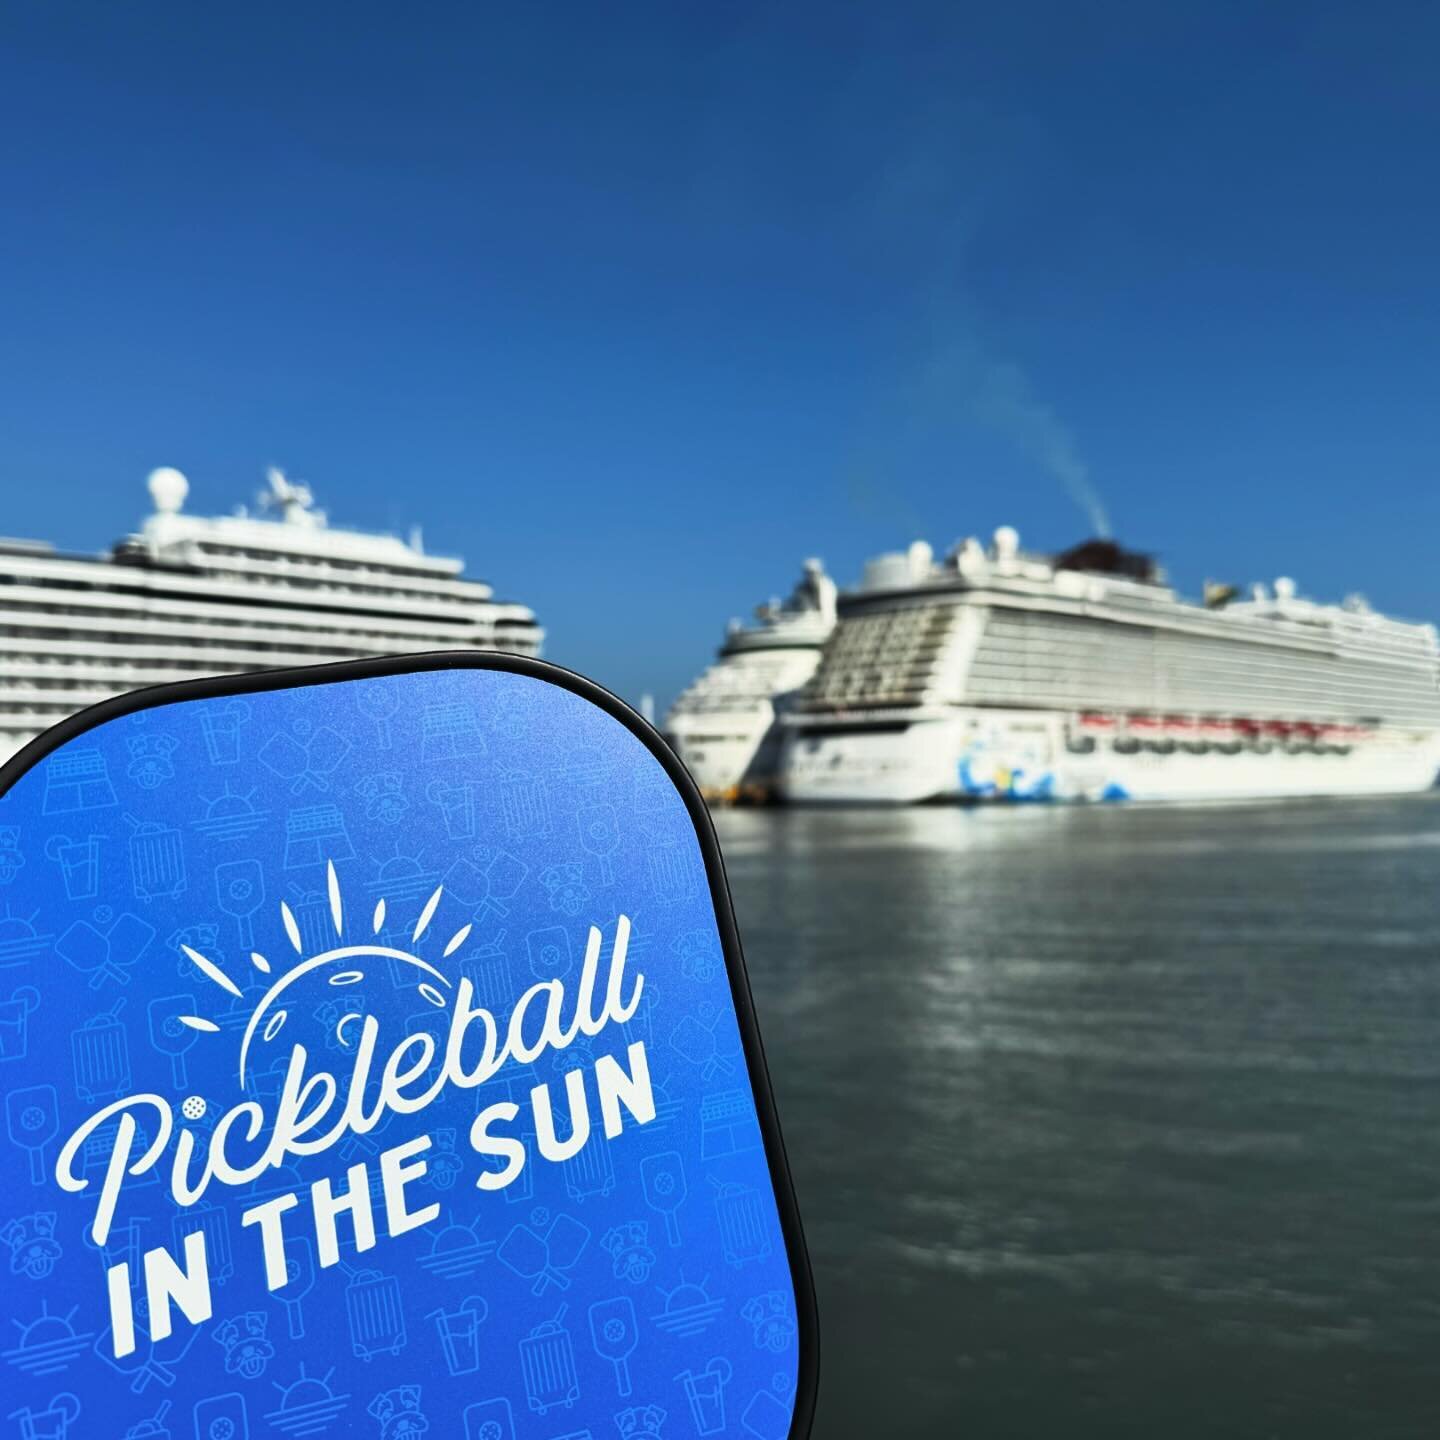 Always pack a paddle wherever you travel to! Land or sea. #pickleballinthesun 🌊 #pickleball 

#ppatour #travel #pickleballislife #royalcaribbean #norwegian